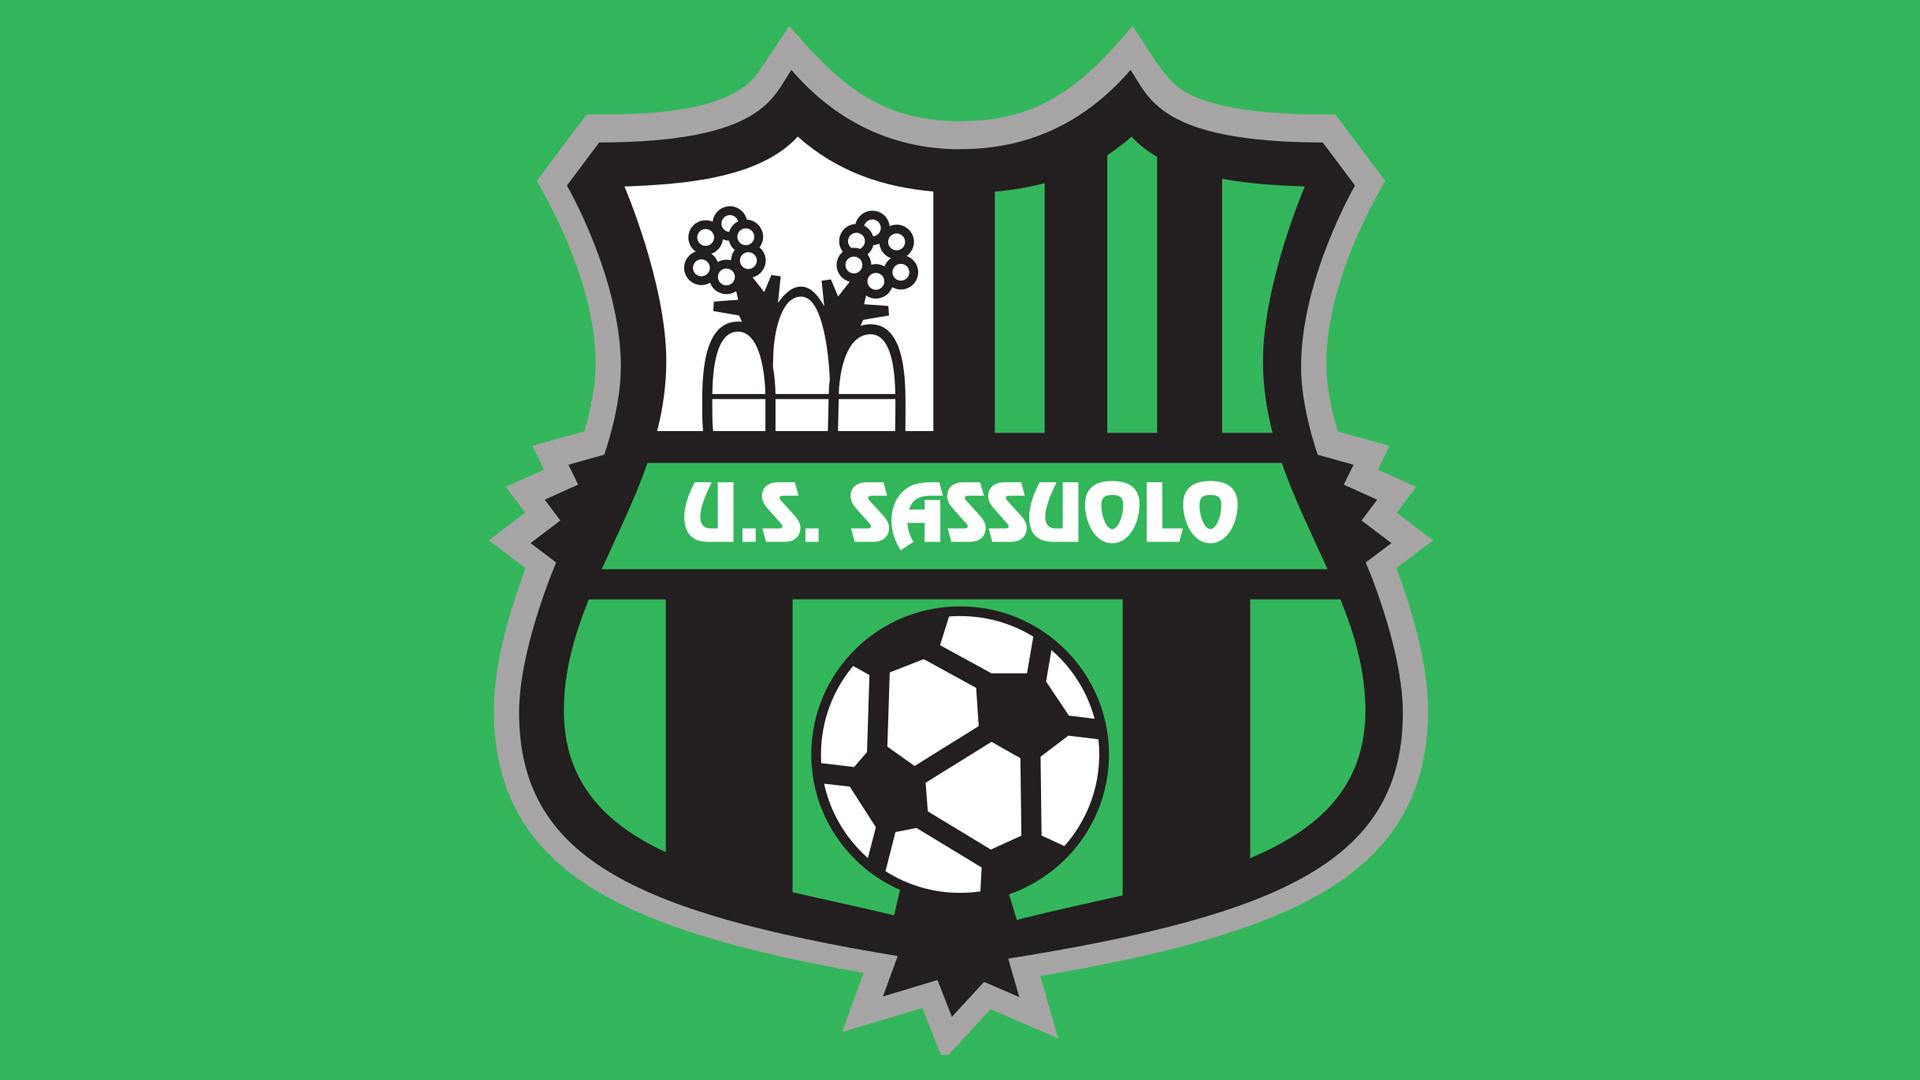 HD Wallpaper Of The Logo Of U.S. Sassuolo Calcio Football Club